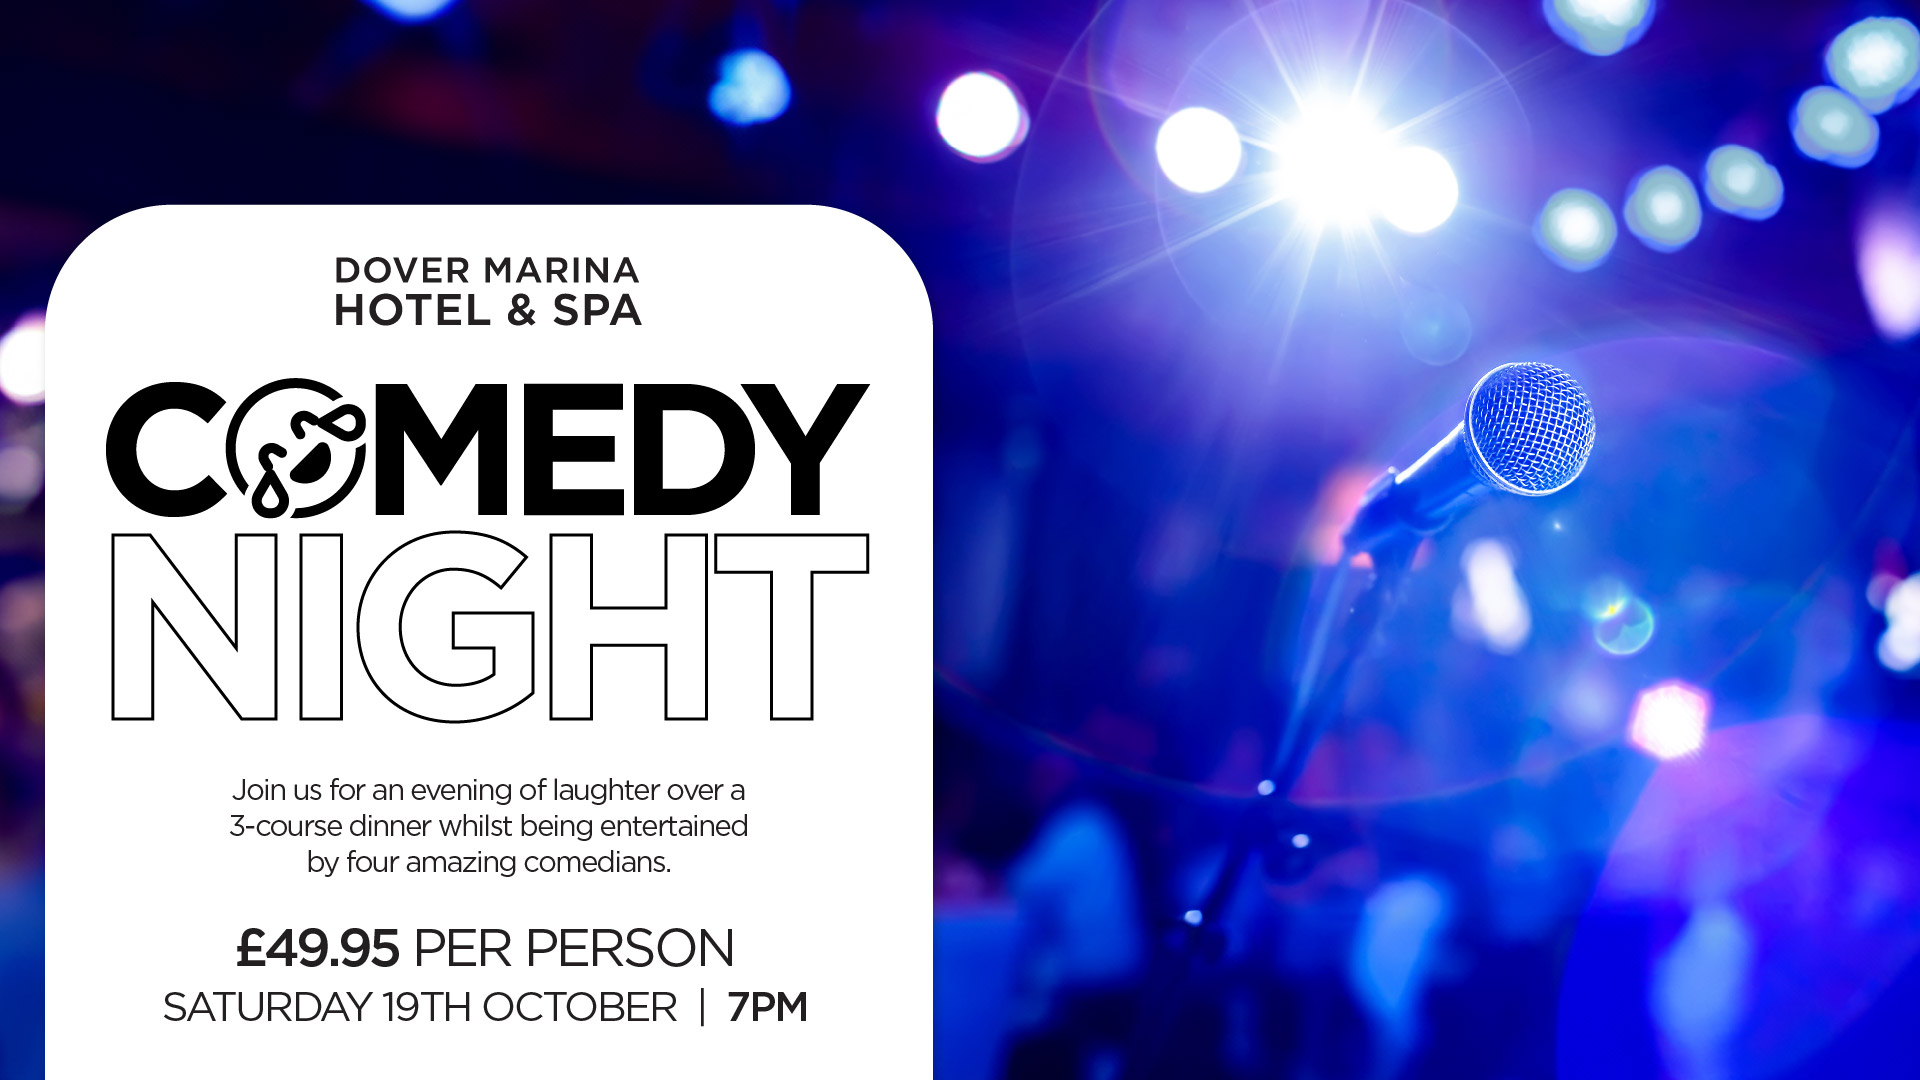 Comedy Night in Dover Marina